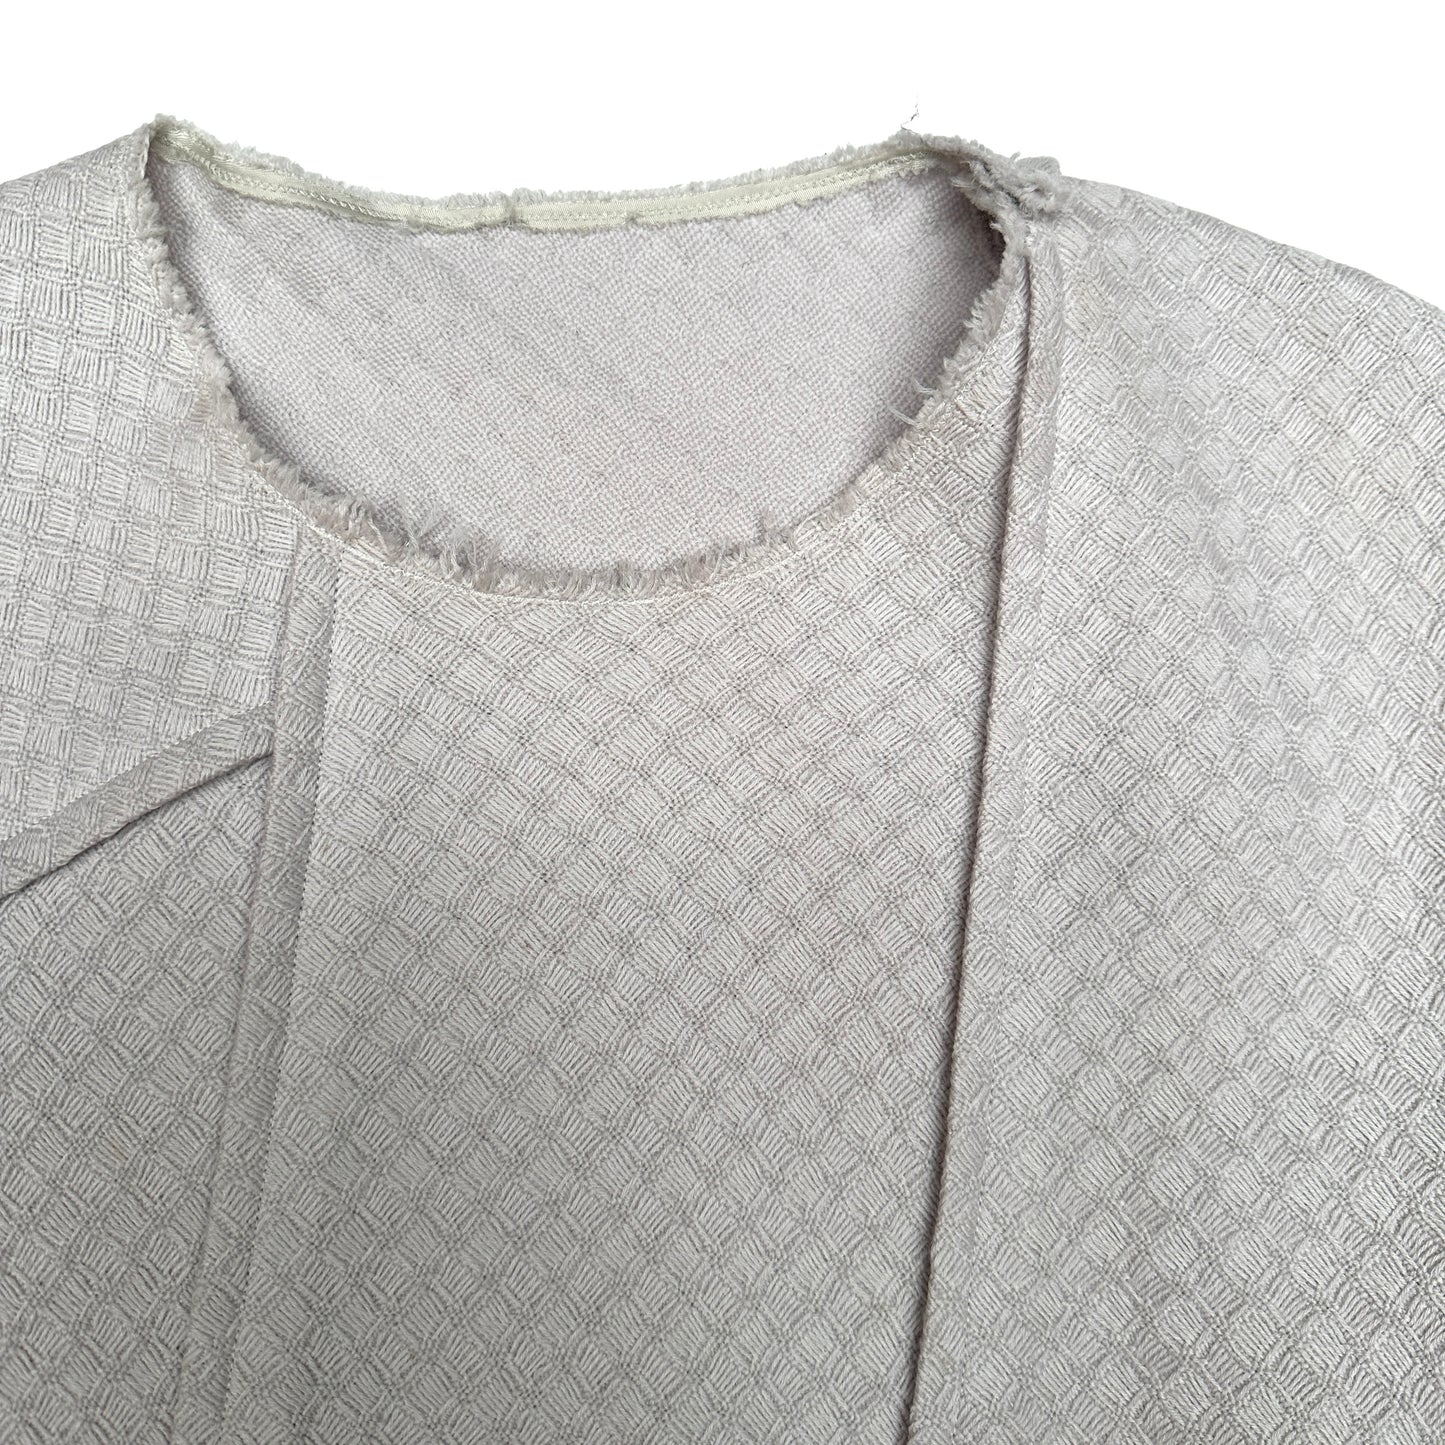 Grey Wool Dress w/Silver & Lace details - M